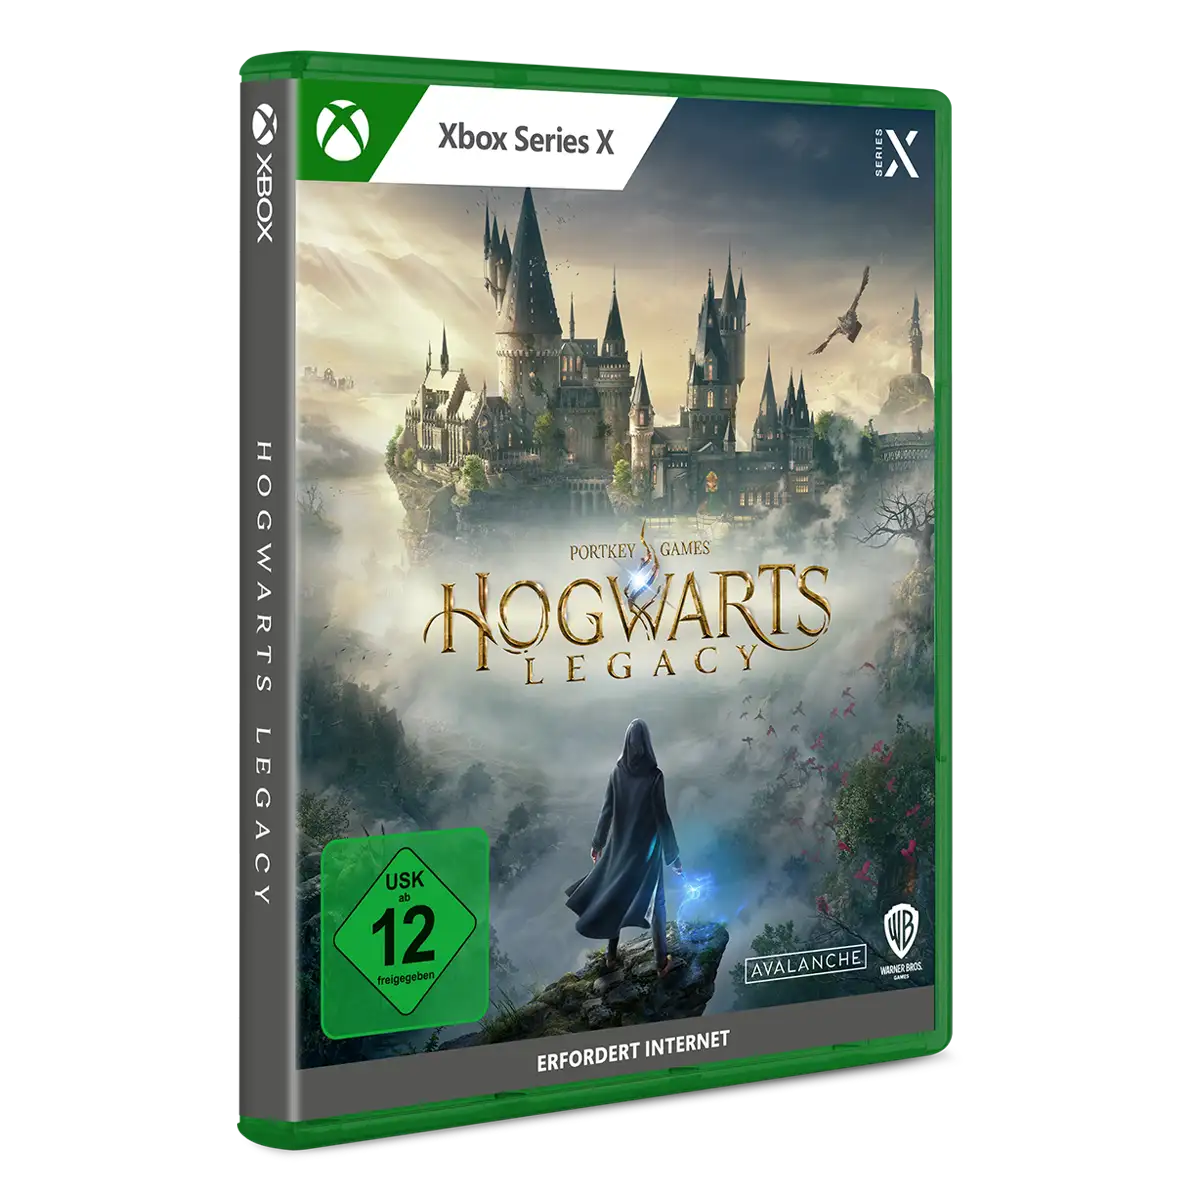 Hogwarts Legacy (Xbox Series X) Image 2